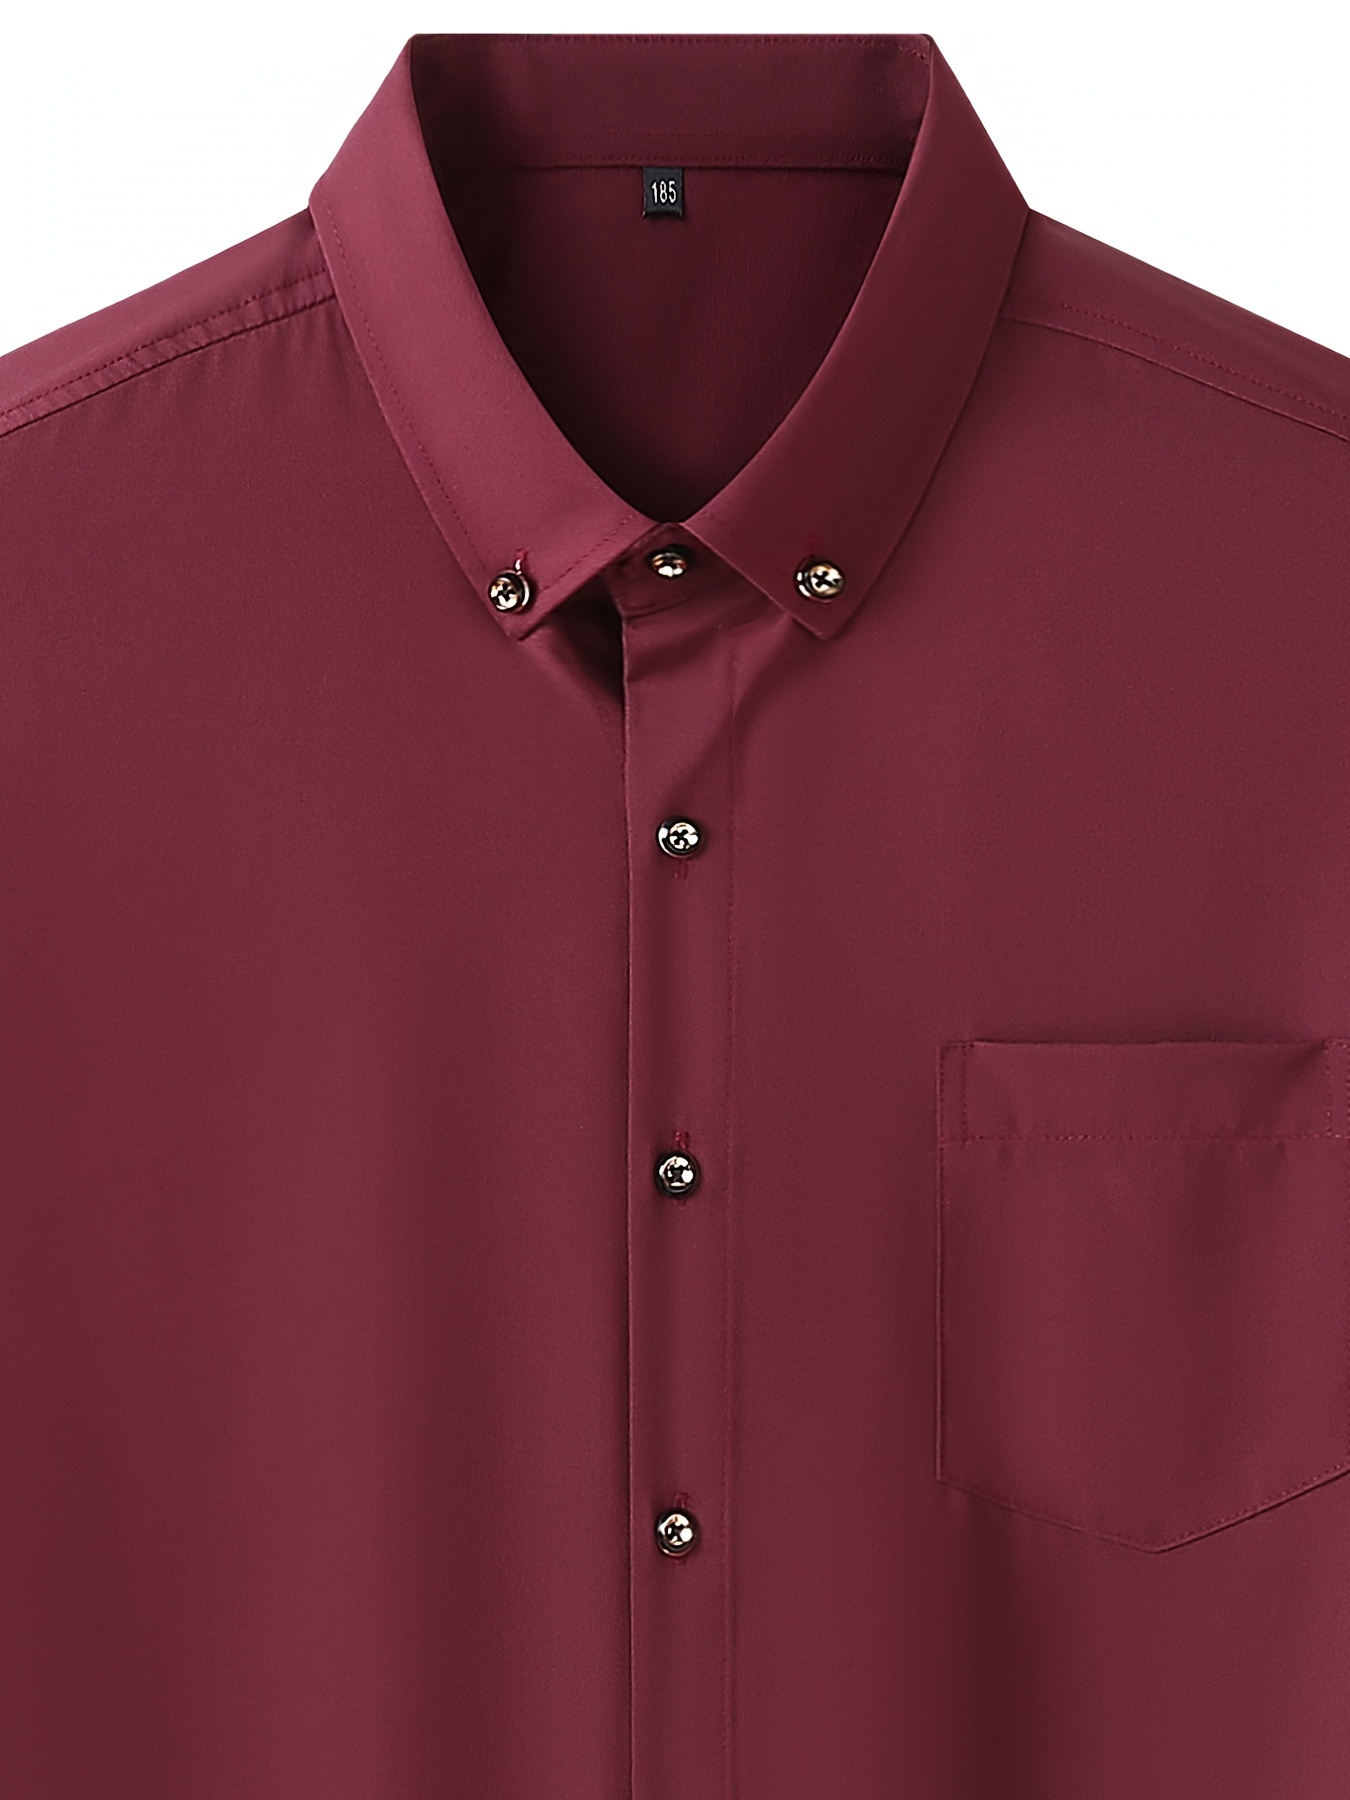 Men Big and Tall Summer Short Sleeve Shirts Classic Button Up Shirt Plus  Size Summer Casual Tops Short Sleeve Tshirt 